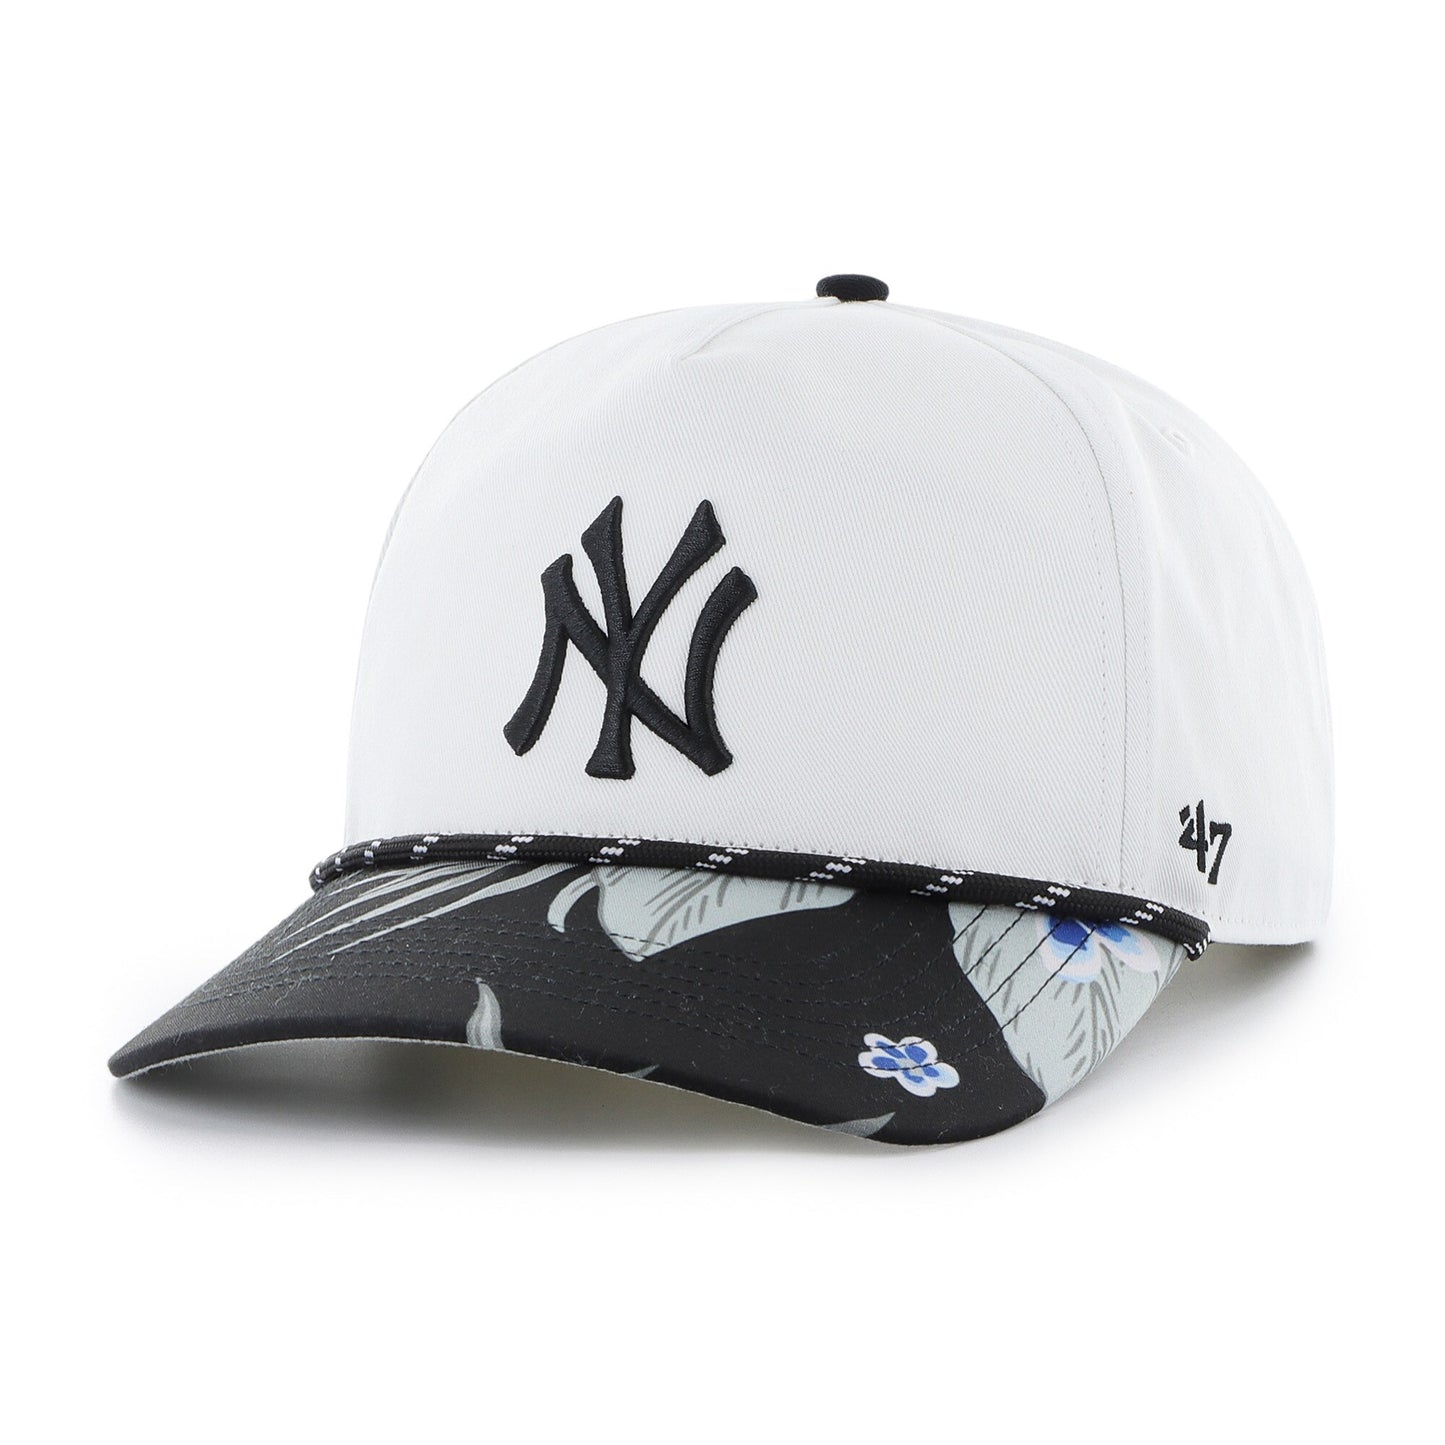 New York Yankees '47 Dark Tropic Hitch Snapback Hat - White